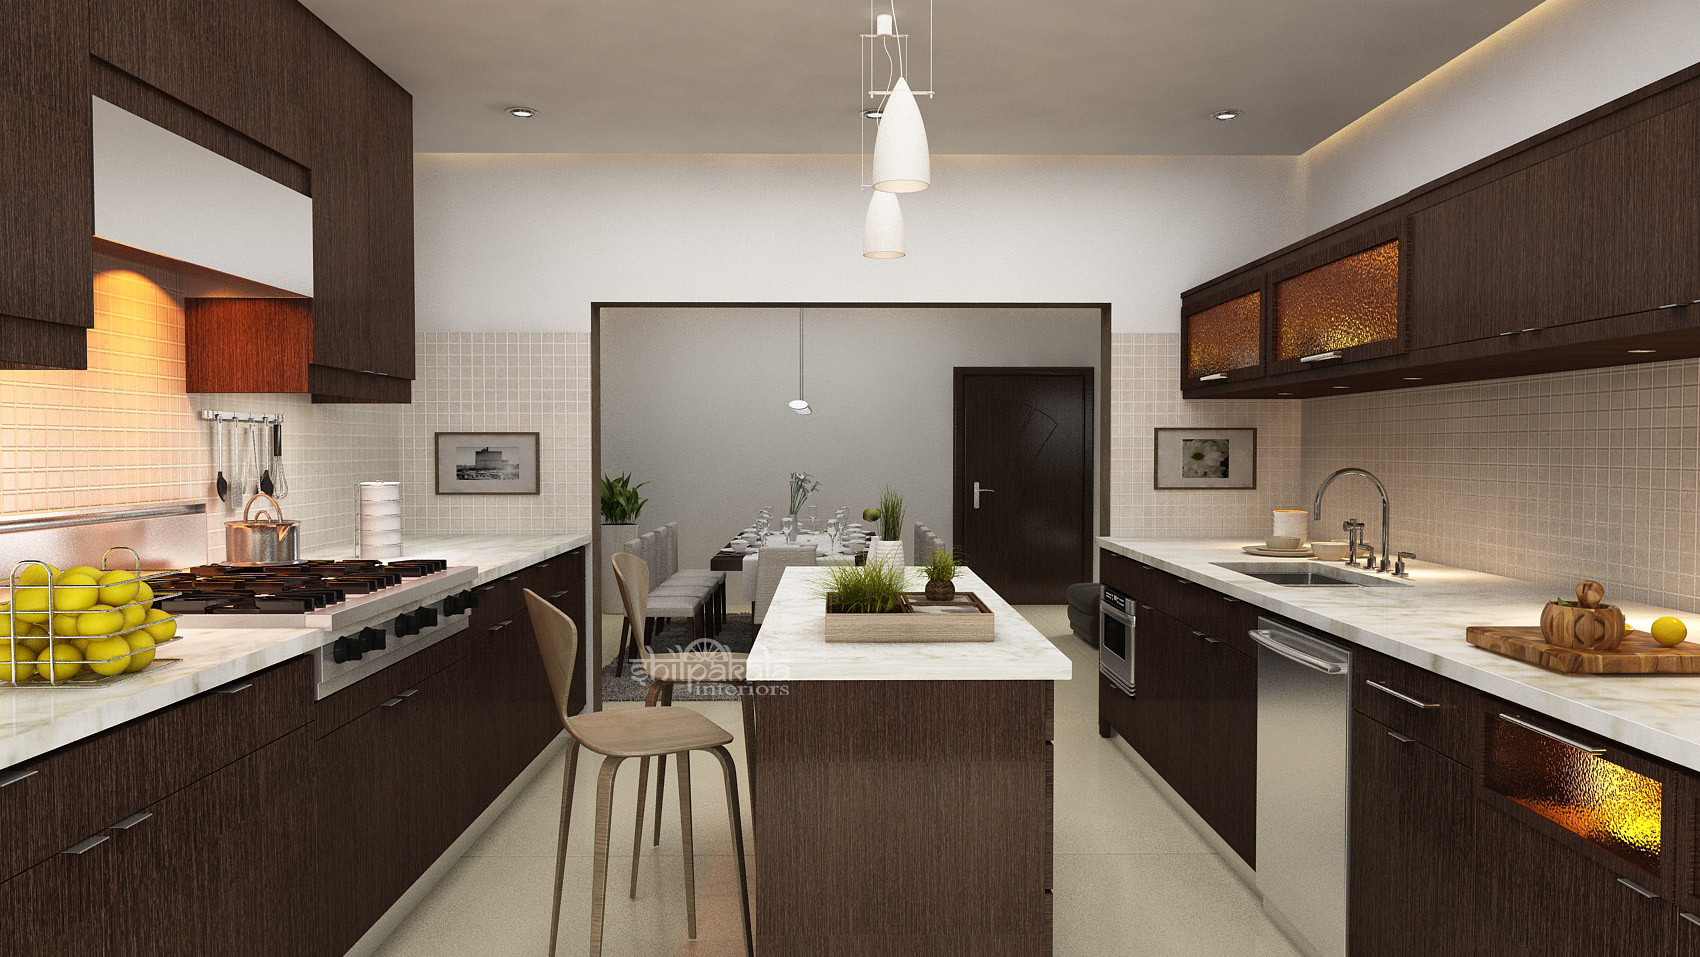 Interior Design Ideas For Kitchen
 Shilpakala Interiors